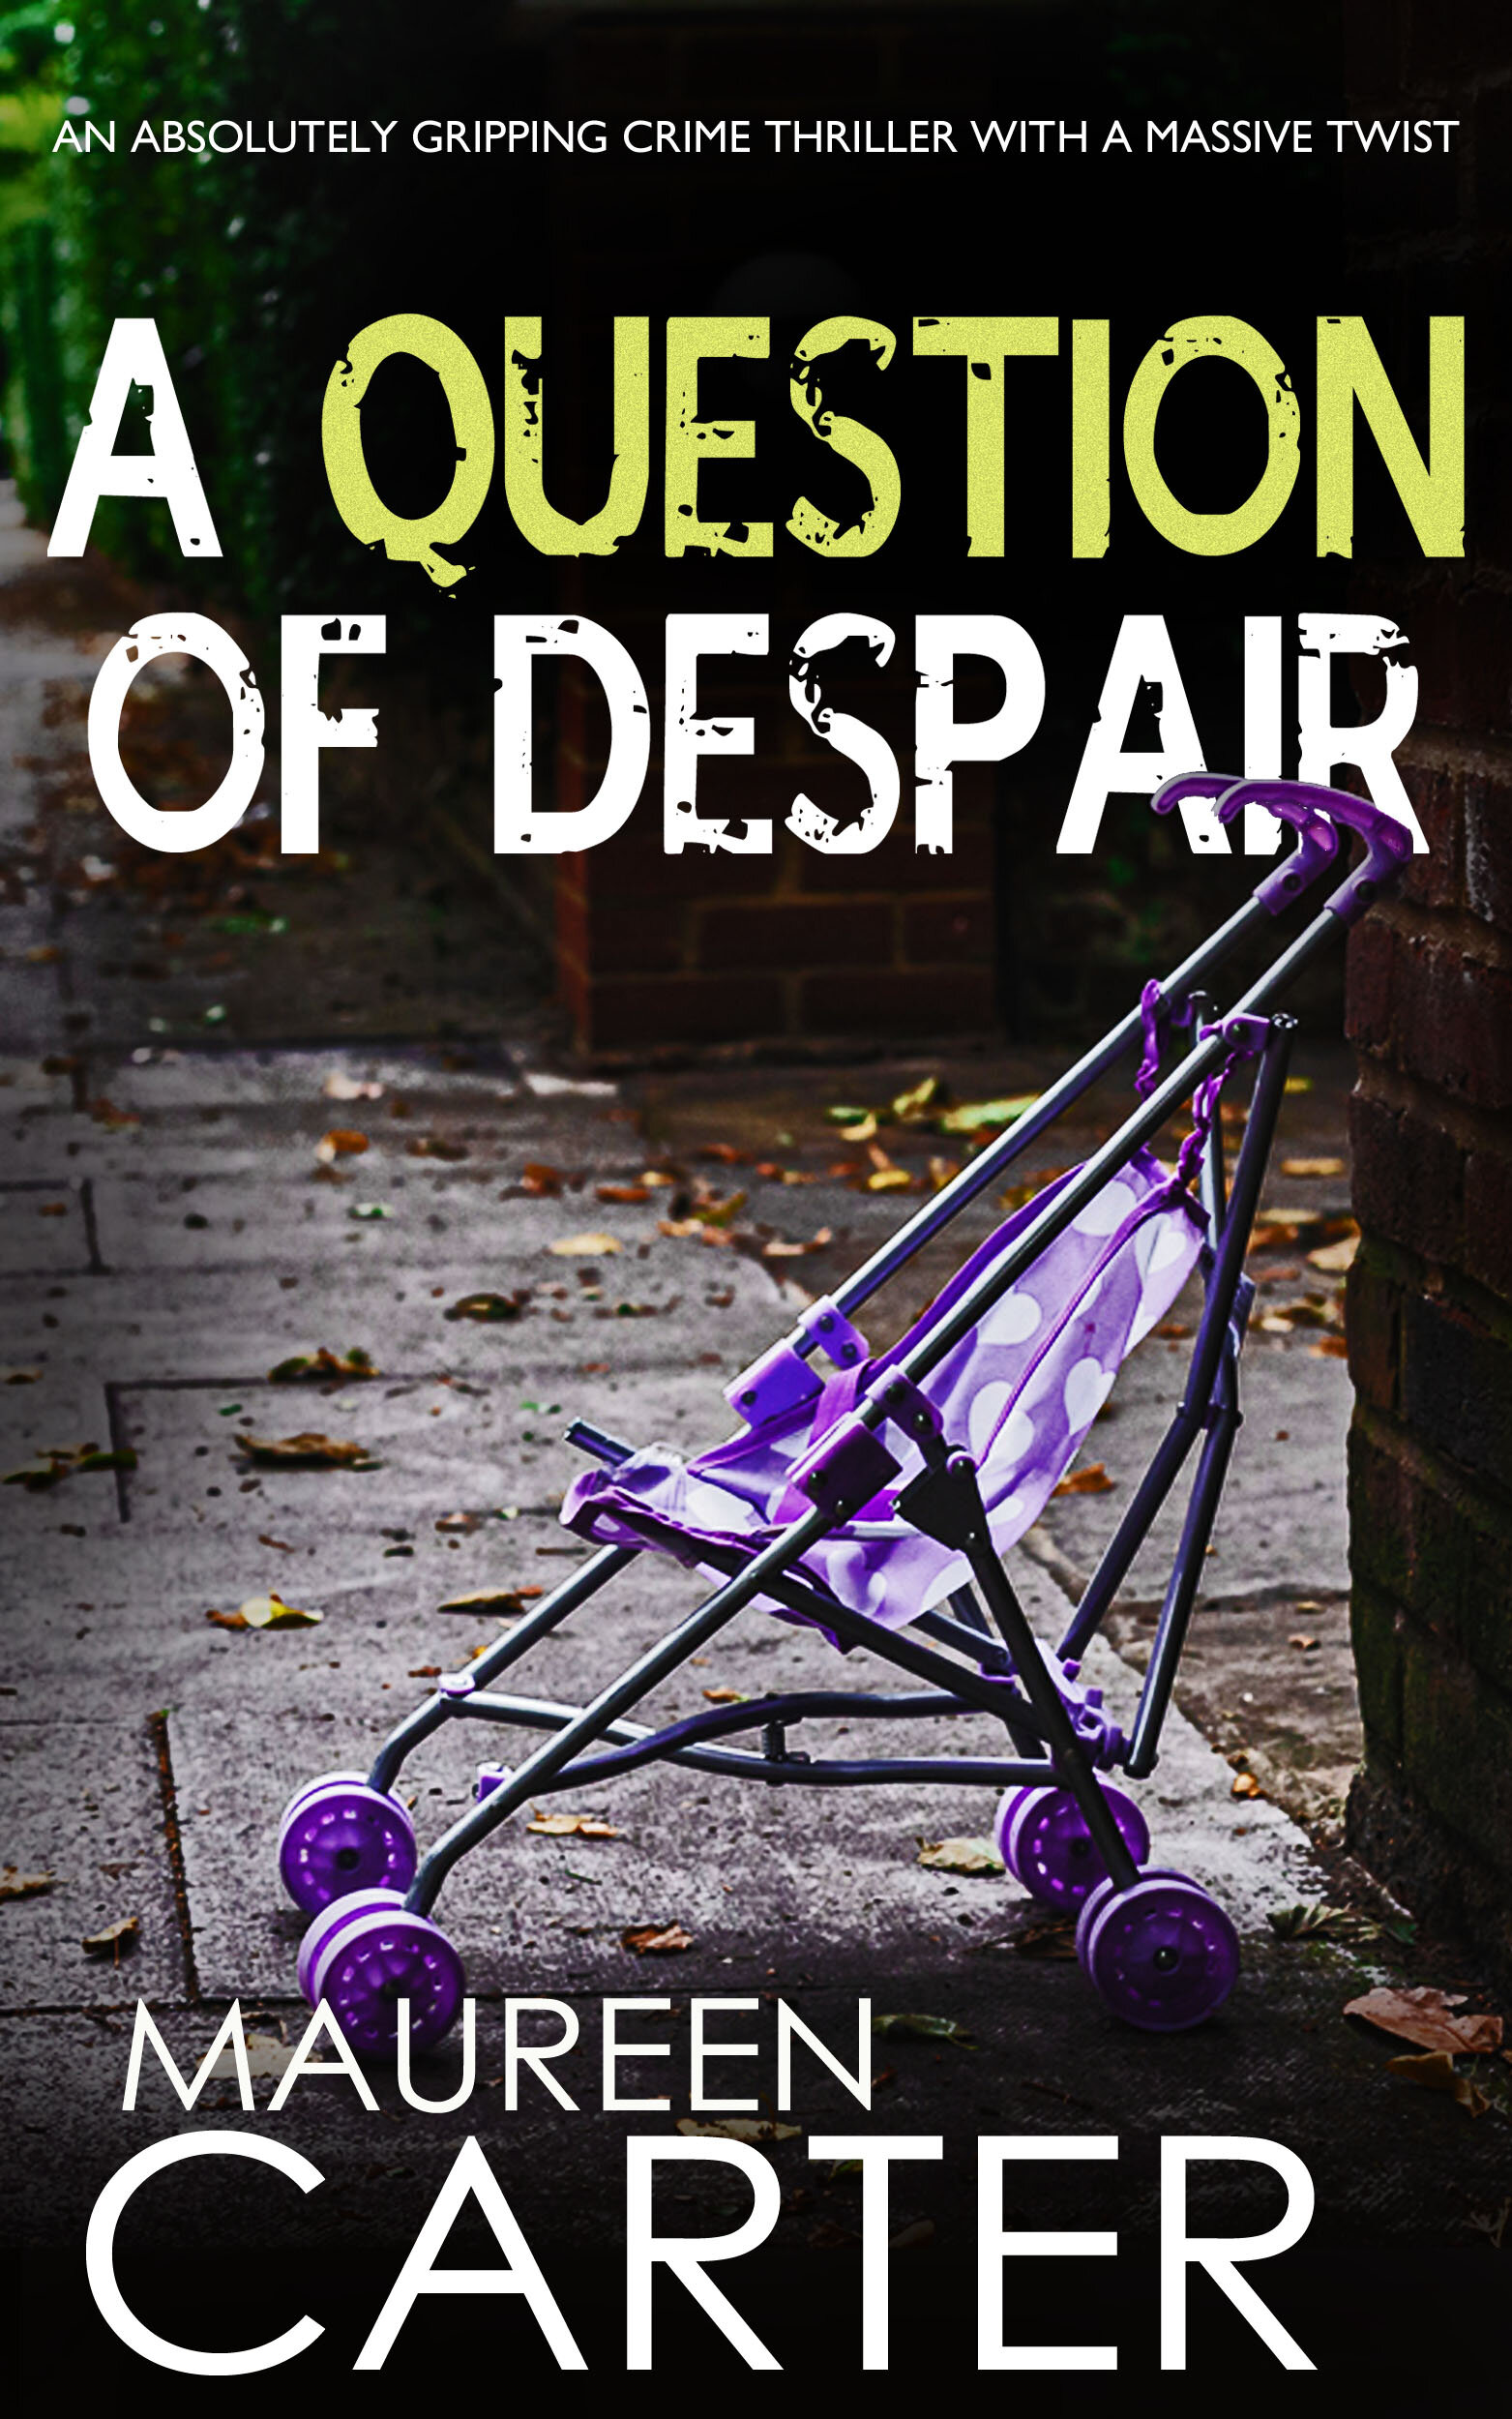 A QUESTION OF DESPAIR stroller.jpg